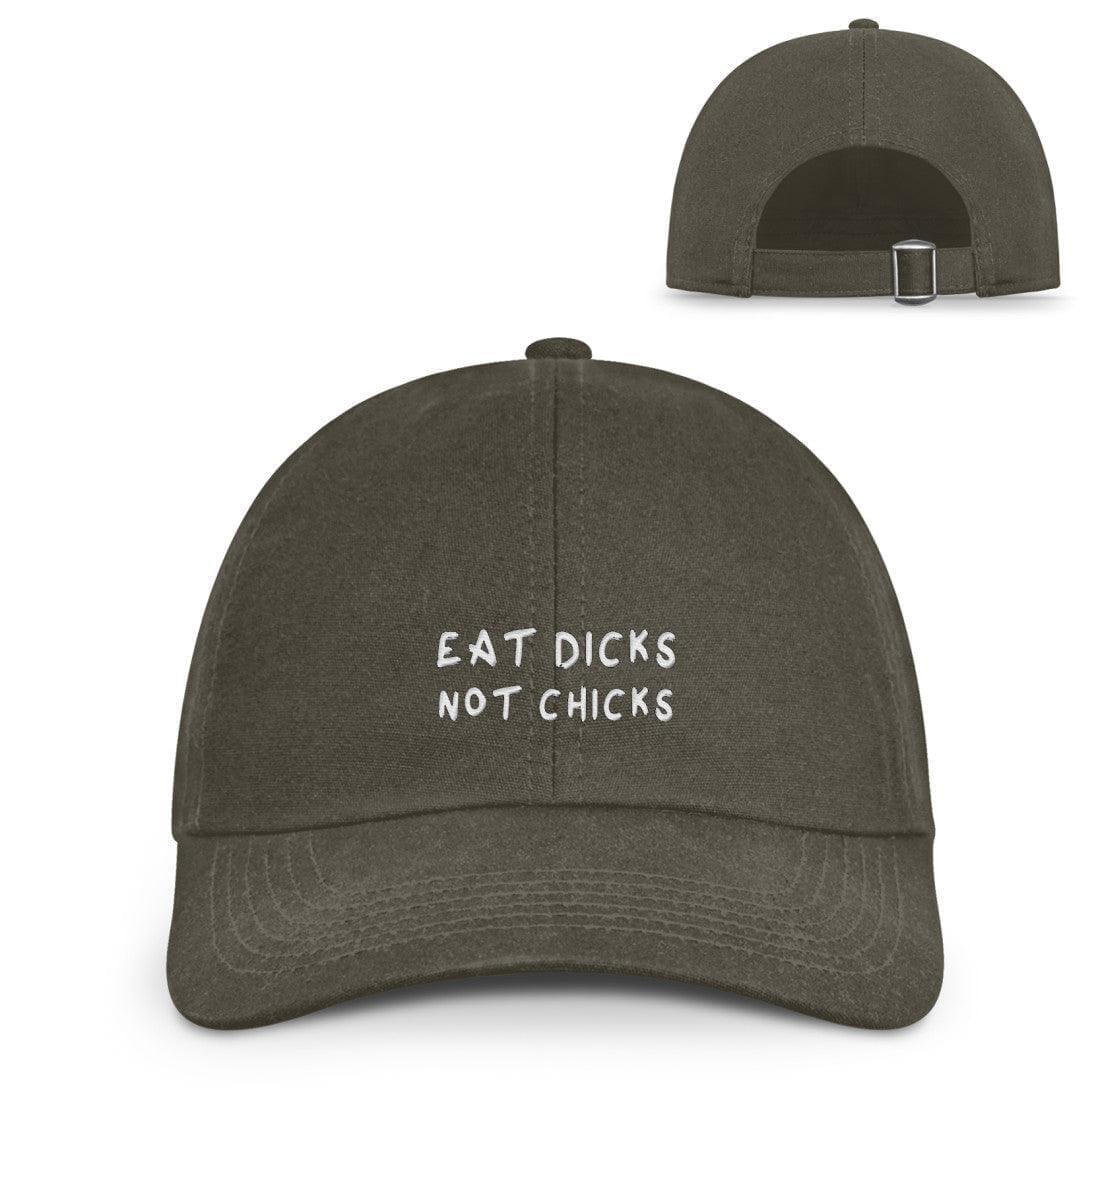 Eat dicks not chicks - Organic Baseball Kappe mit Stick - Team Vegan © vegan t shirt